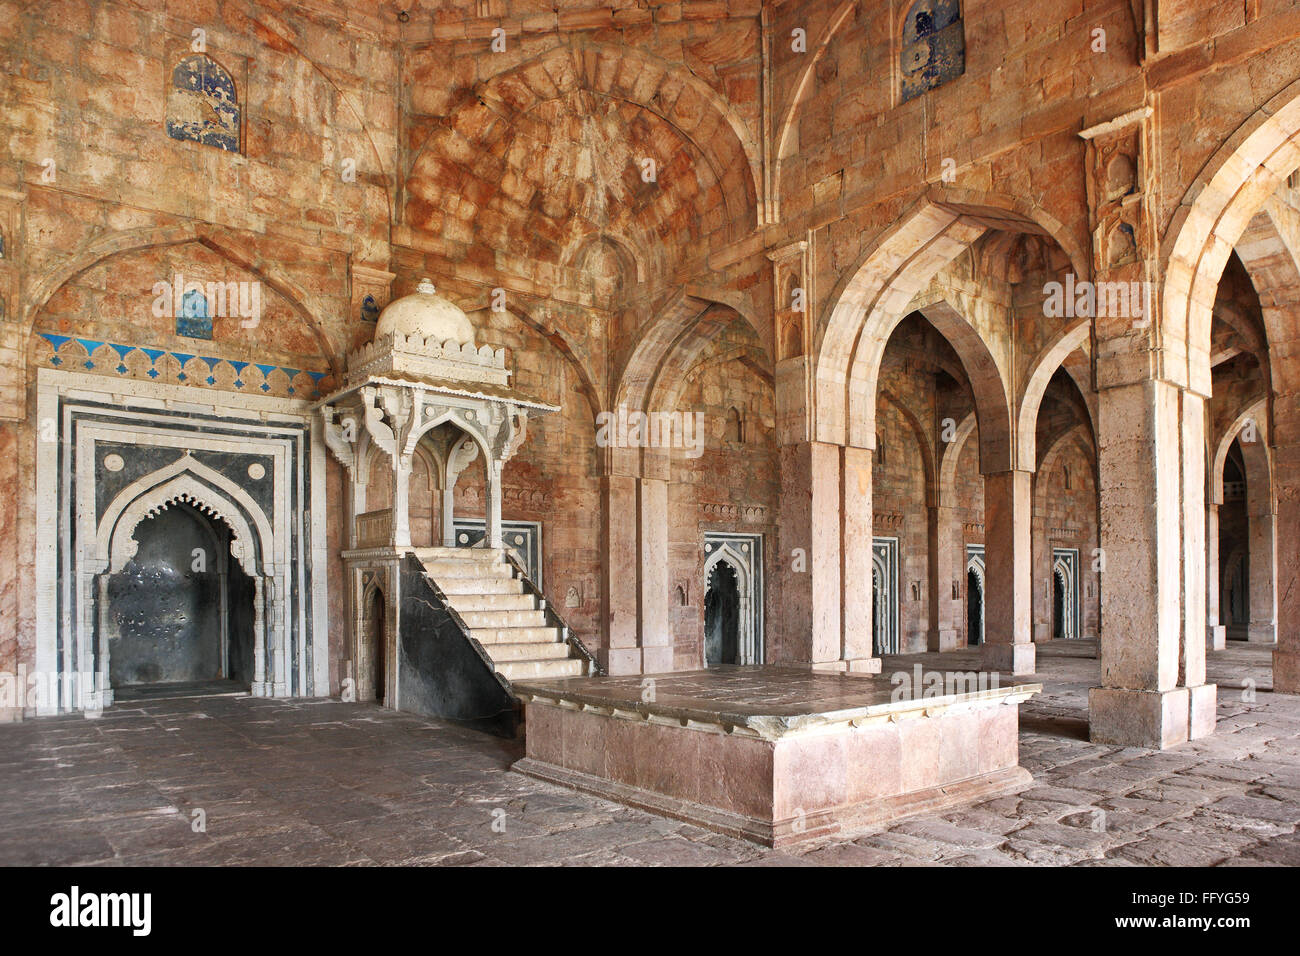 FileDetail of the arches inside Jama Masjid Delhijpg  Wikimedia Commons